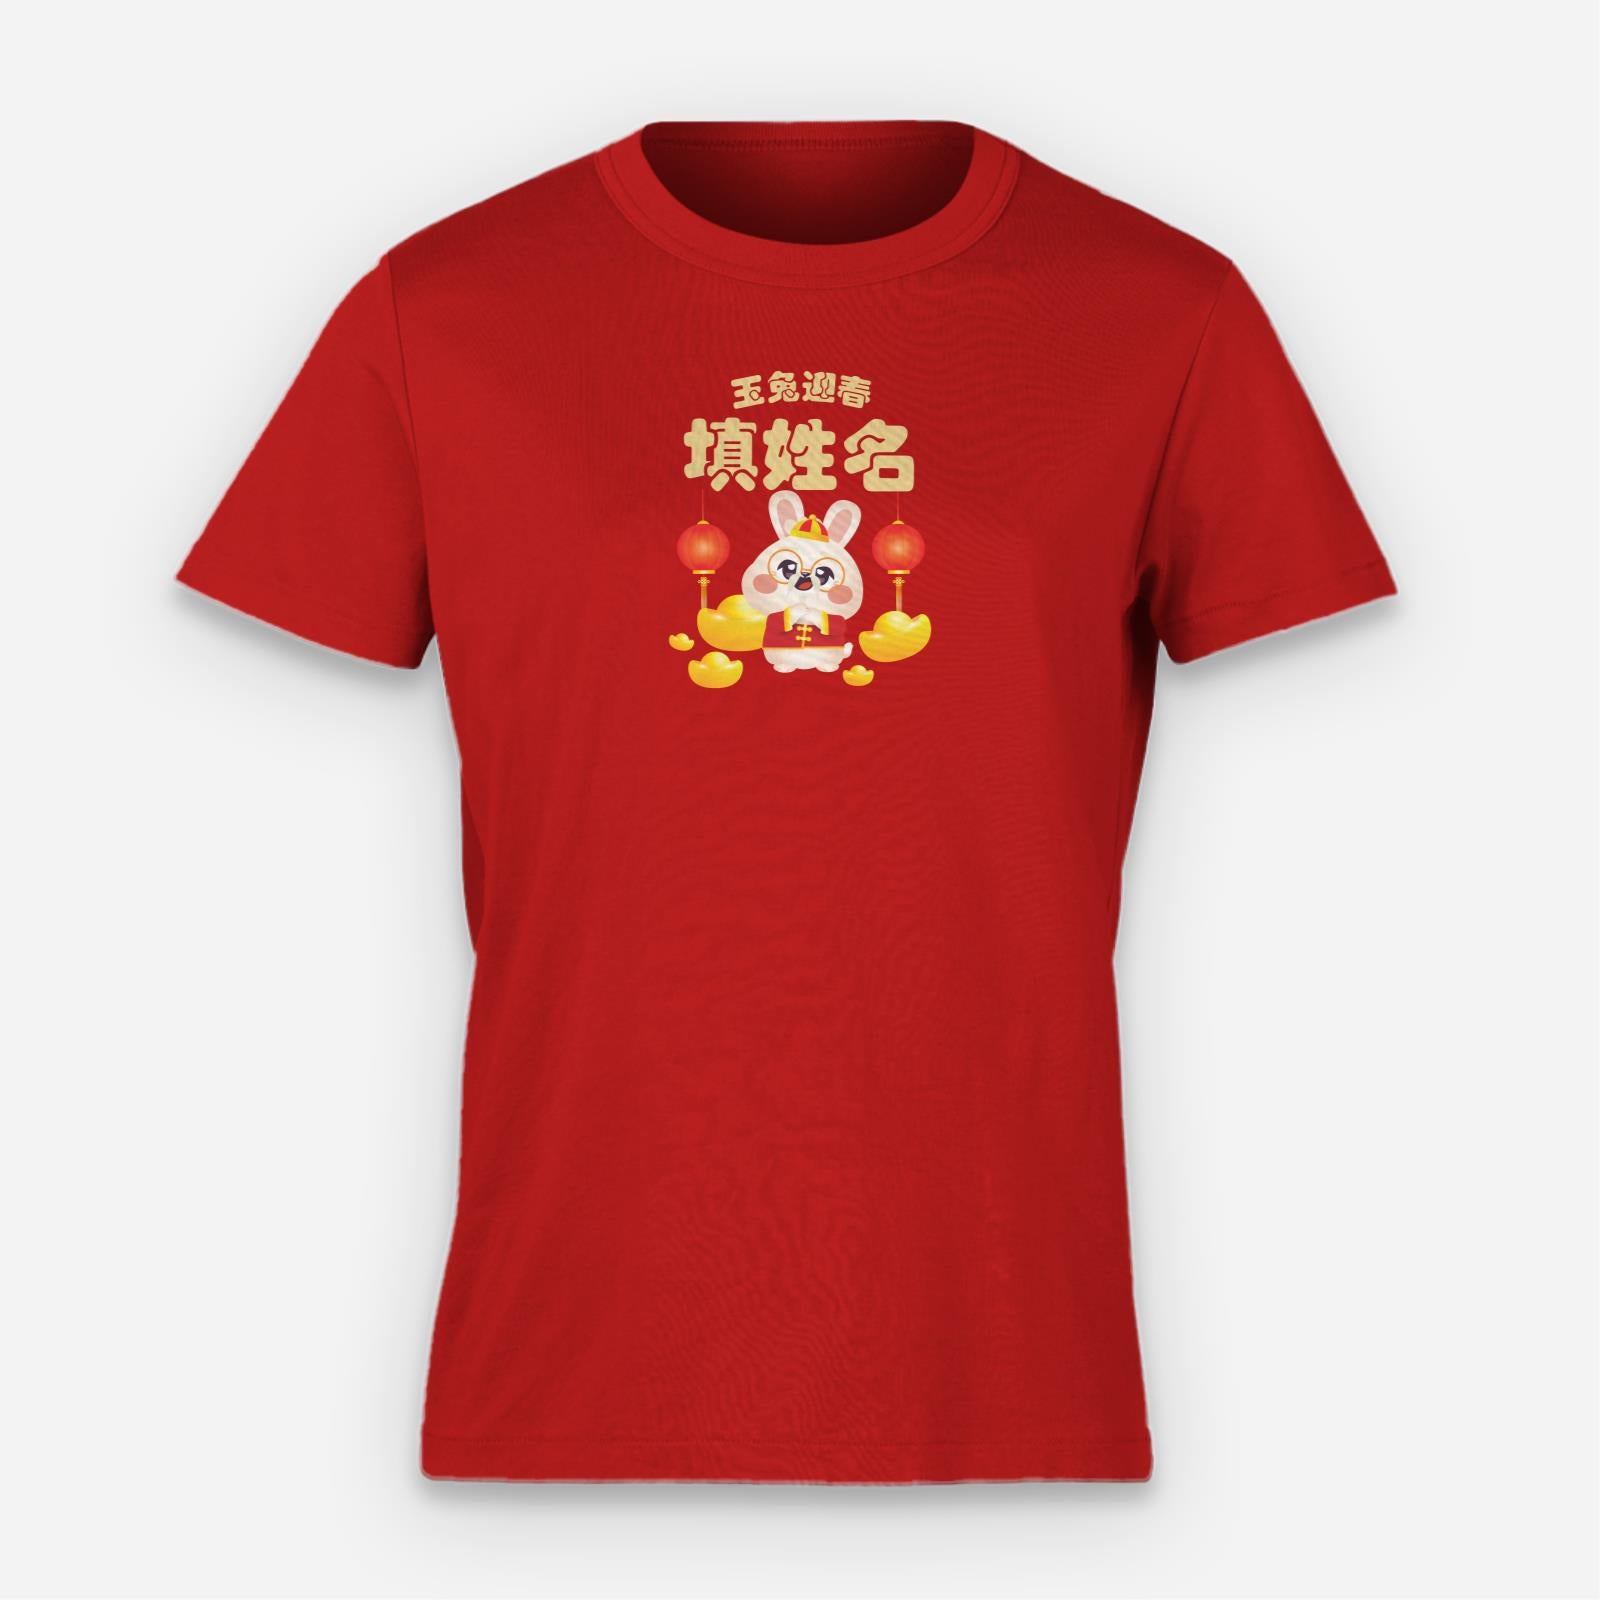 Cny Rabbit Family - Grandpa Rabbit Slim Fit Women Tee Shirt with Chinese Personalization